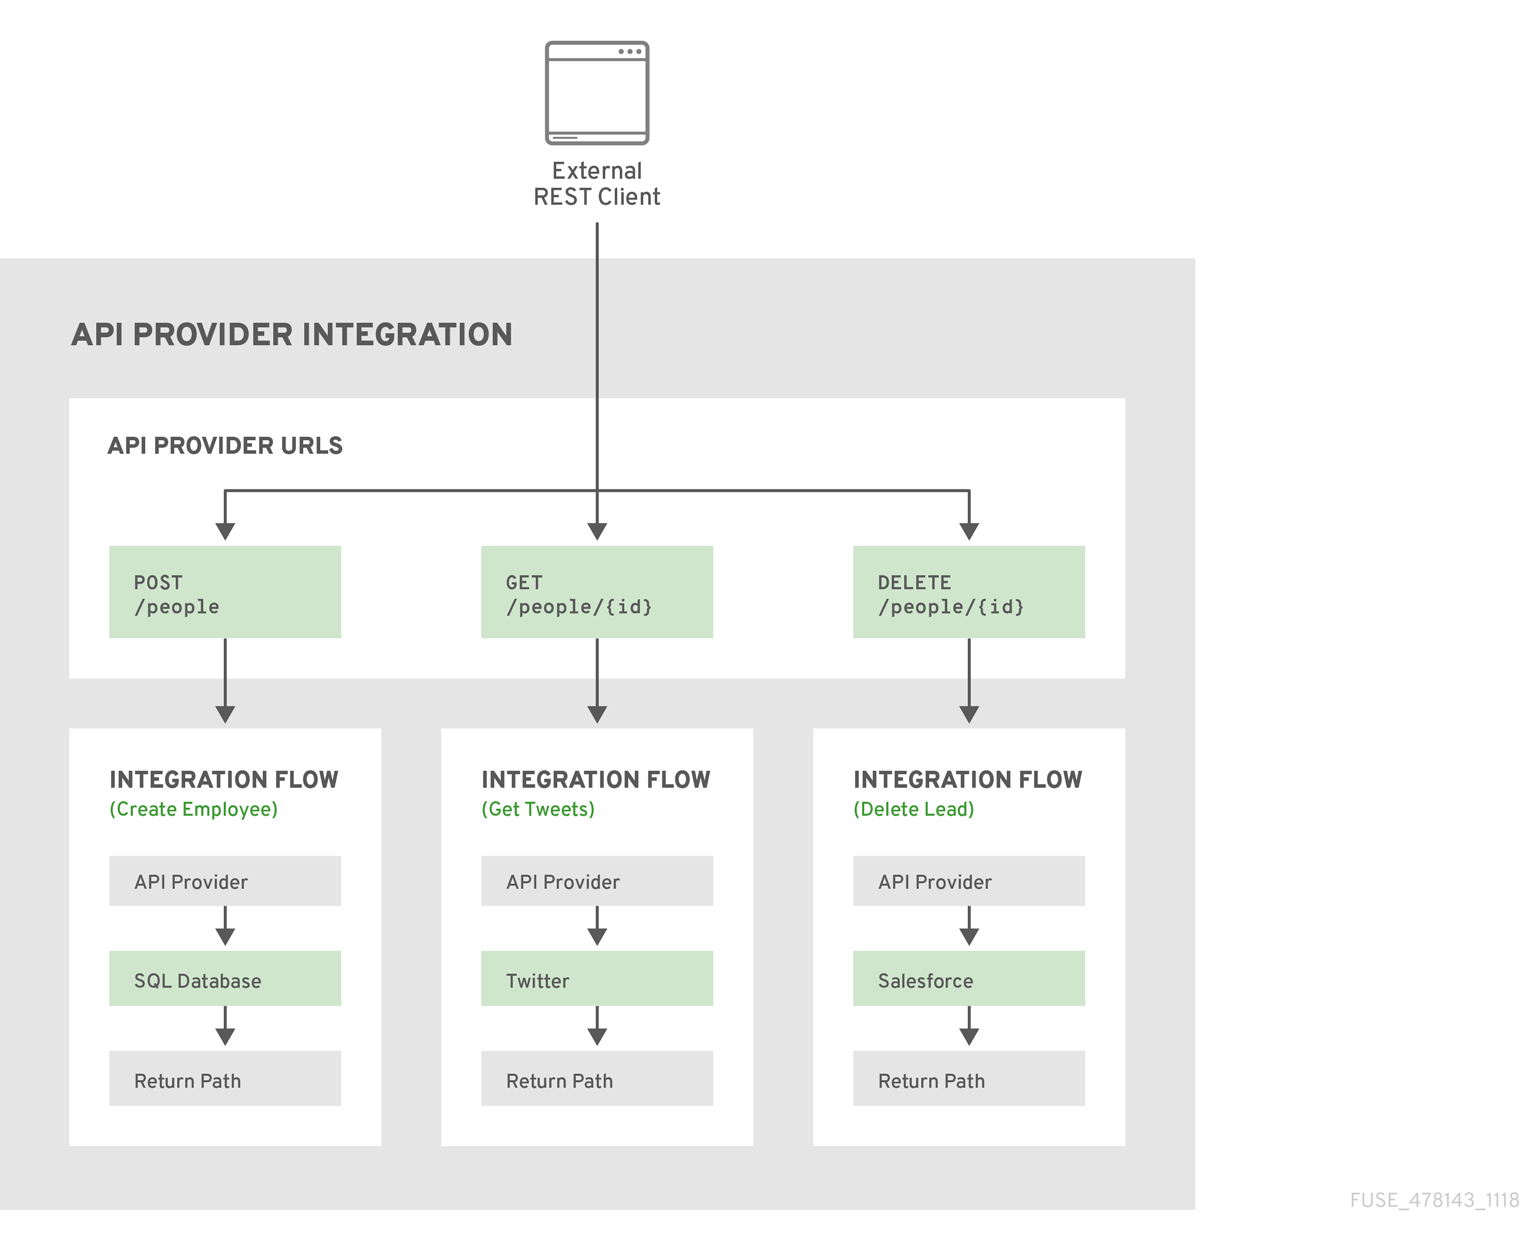 API provider integration with 3 flows